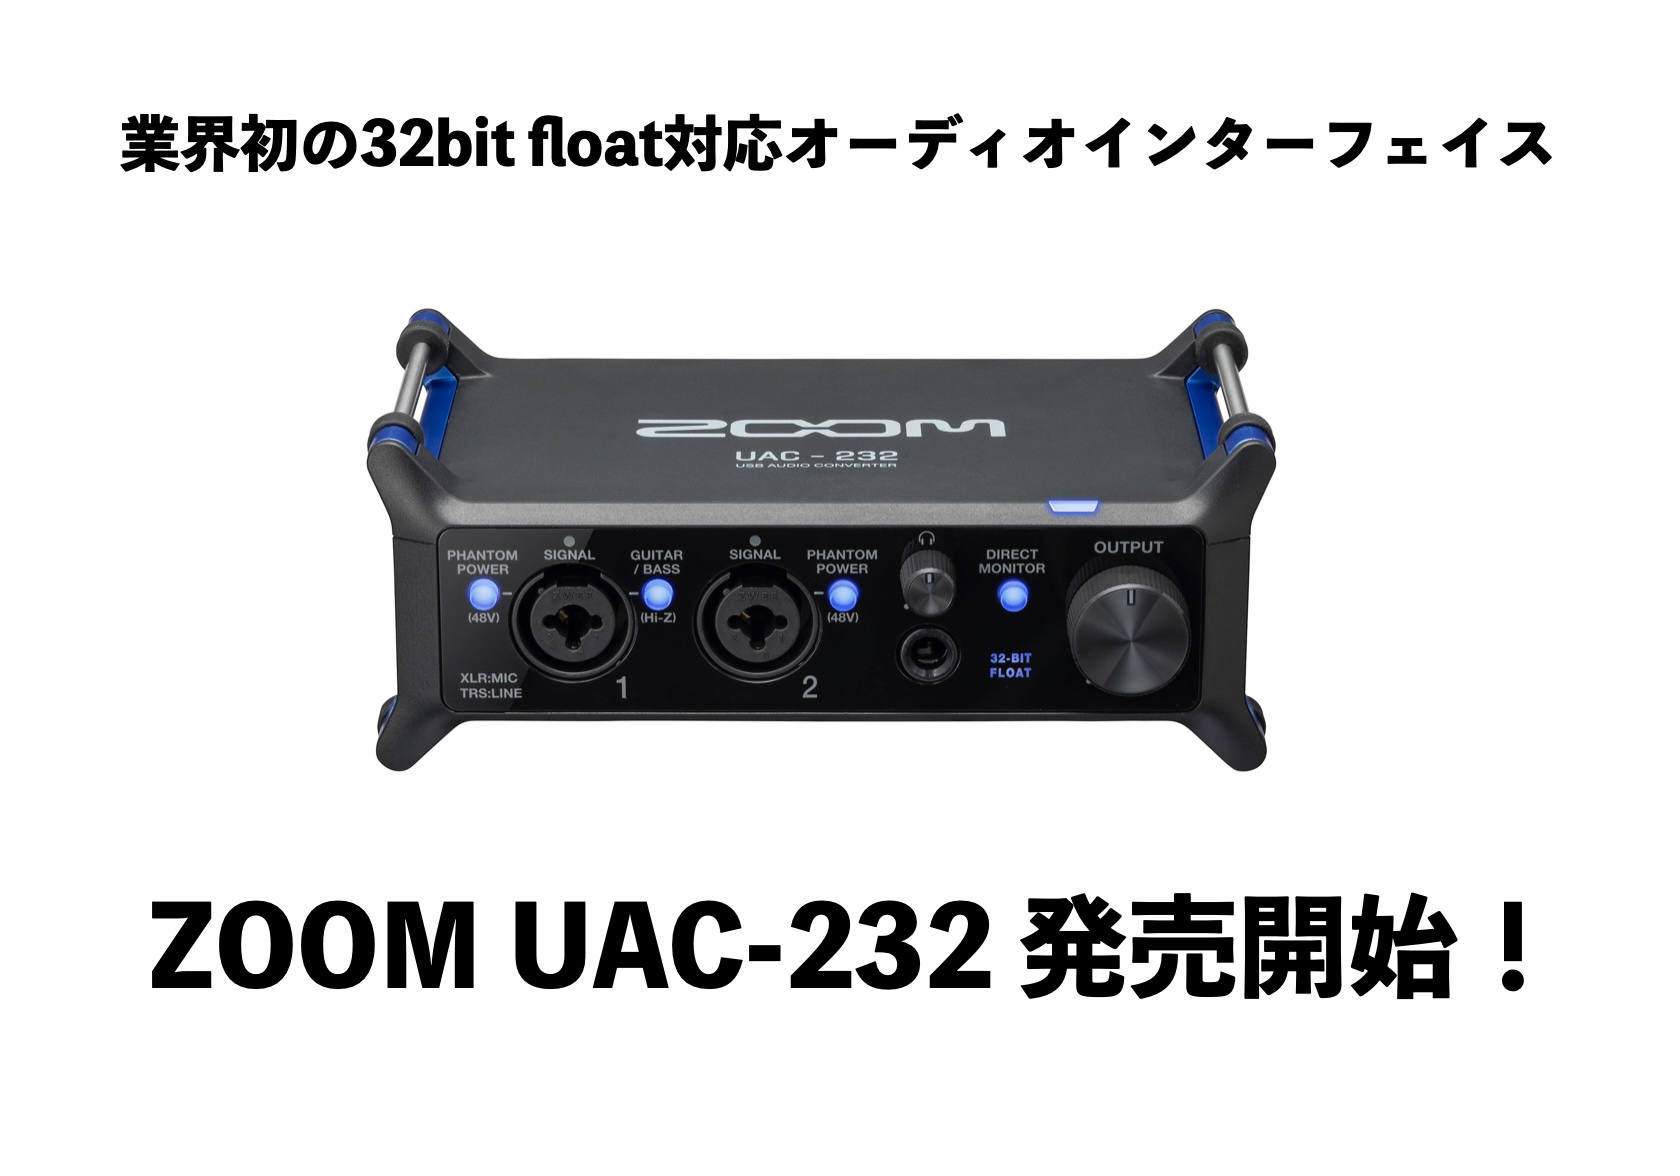 ZOOM UAC-232 32bit float対応でレベル調整が不要となる業界初の